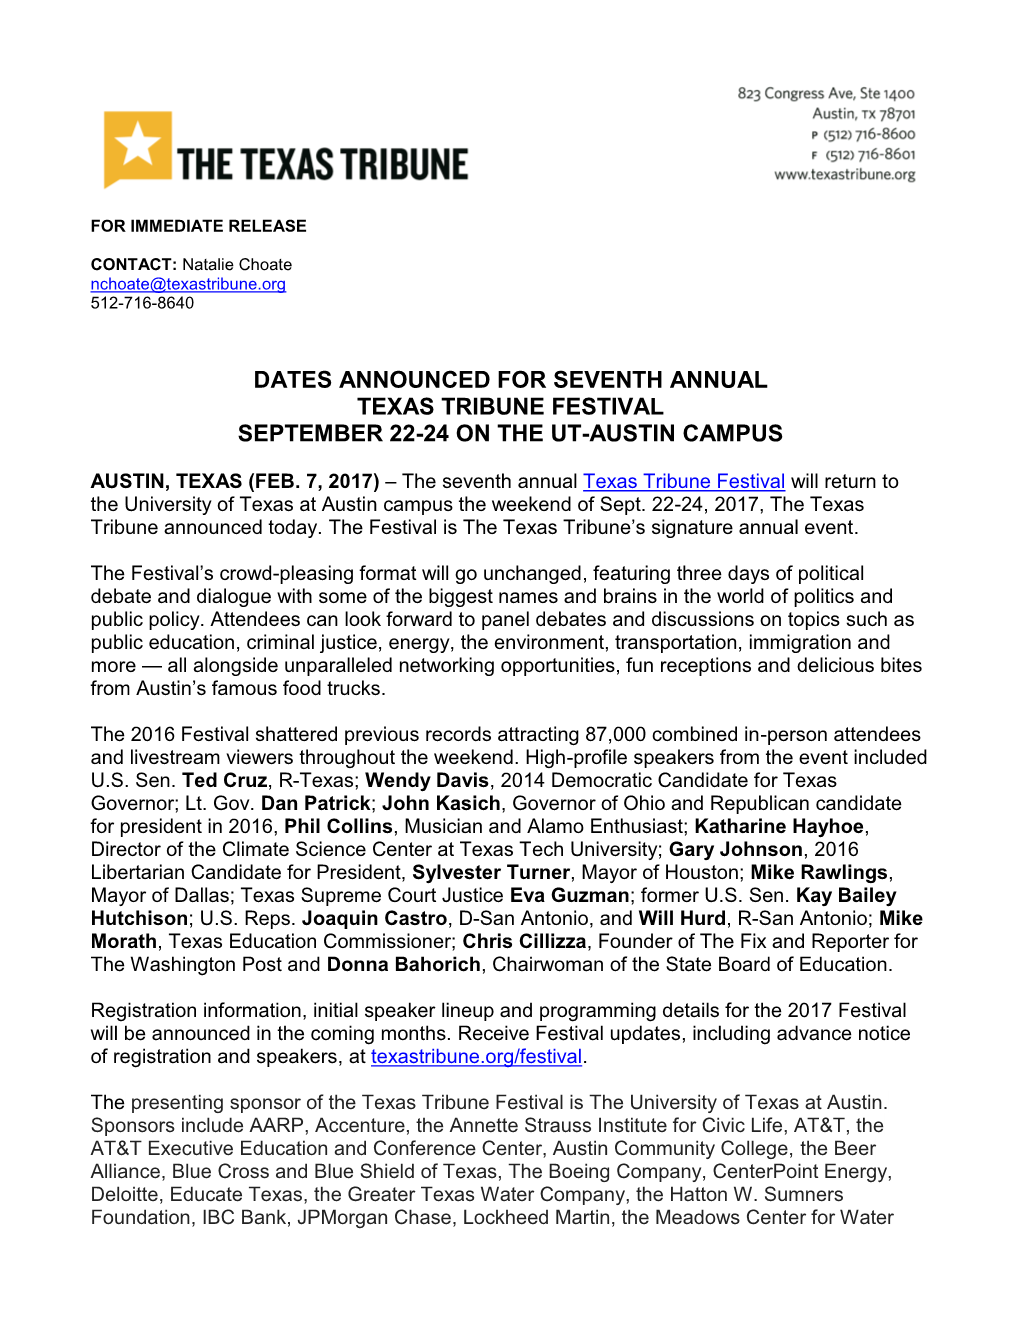 Dates Announced for Seventh Annual Texas Tribune Festival September 22-24 on the Ut-Austin Campus